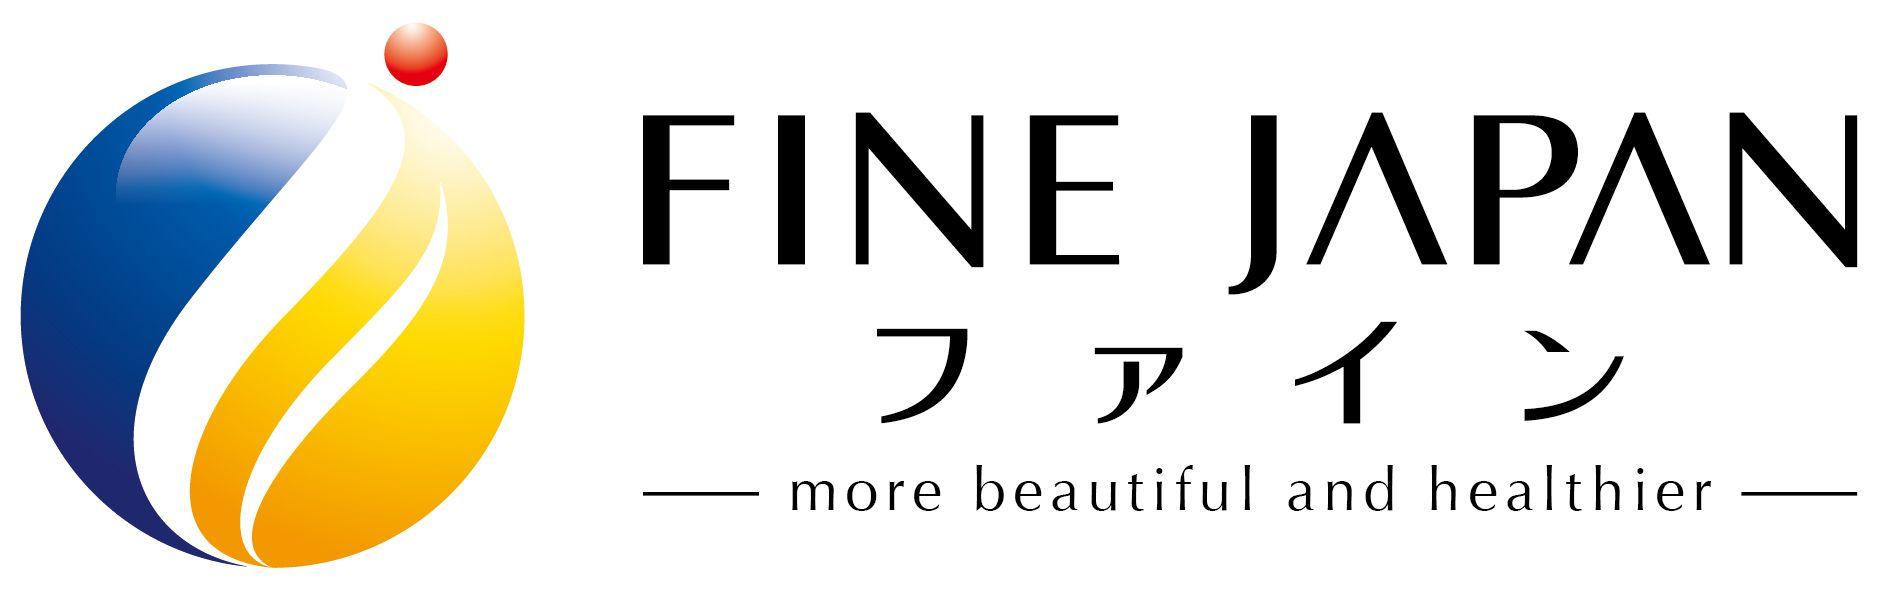 Japan Company Logo - Changed to new logo design | FINE CO., LTD